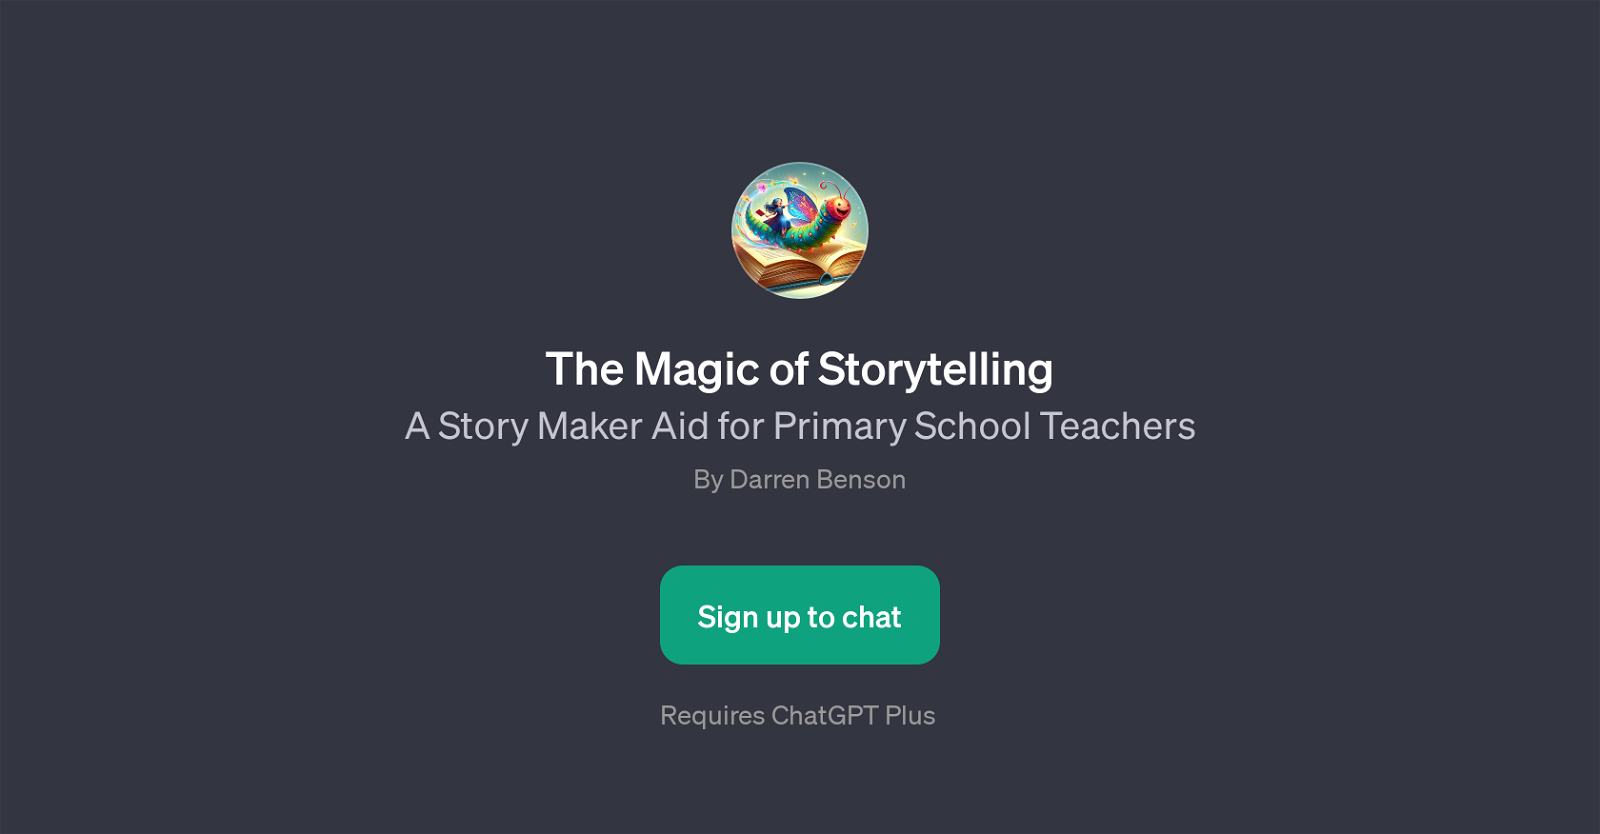 The Magic of Storytelling website